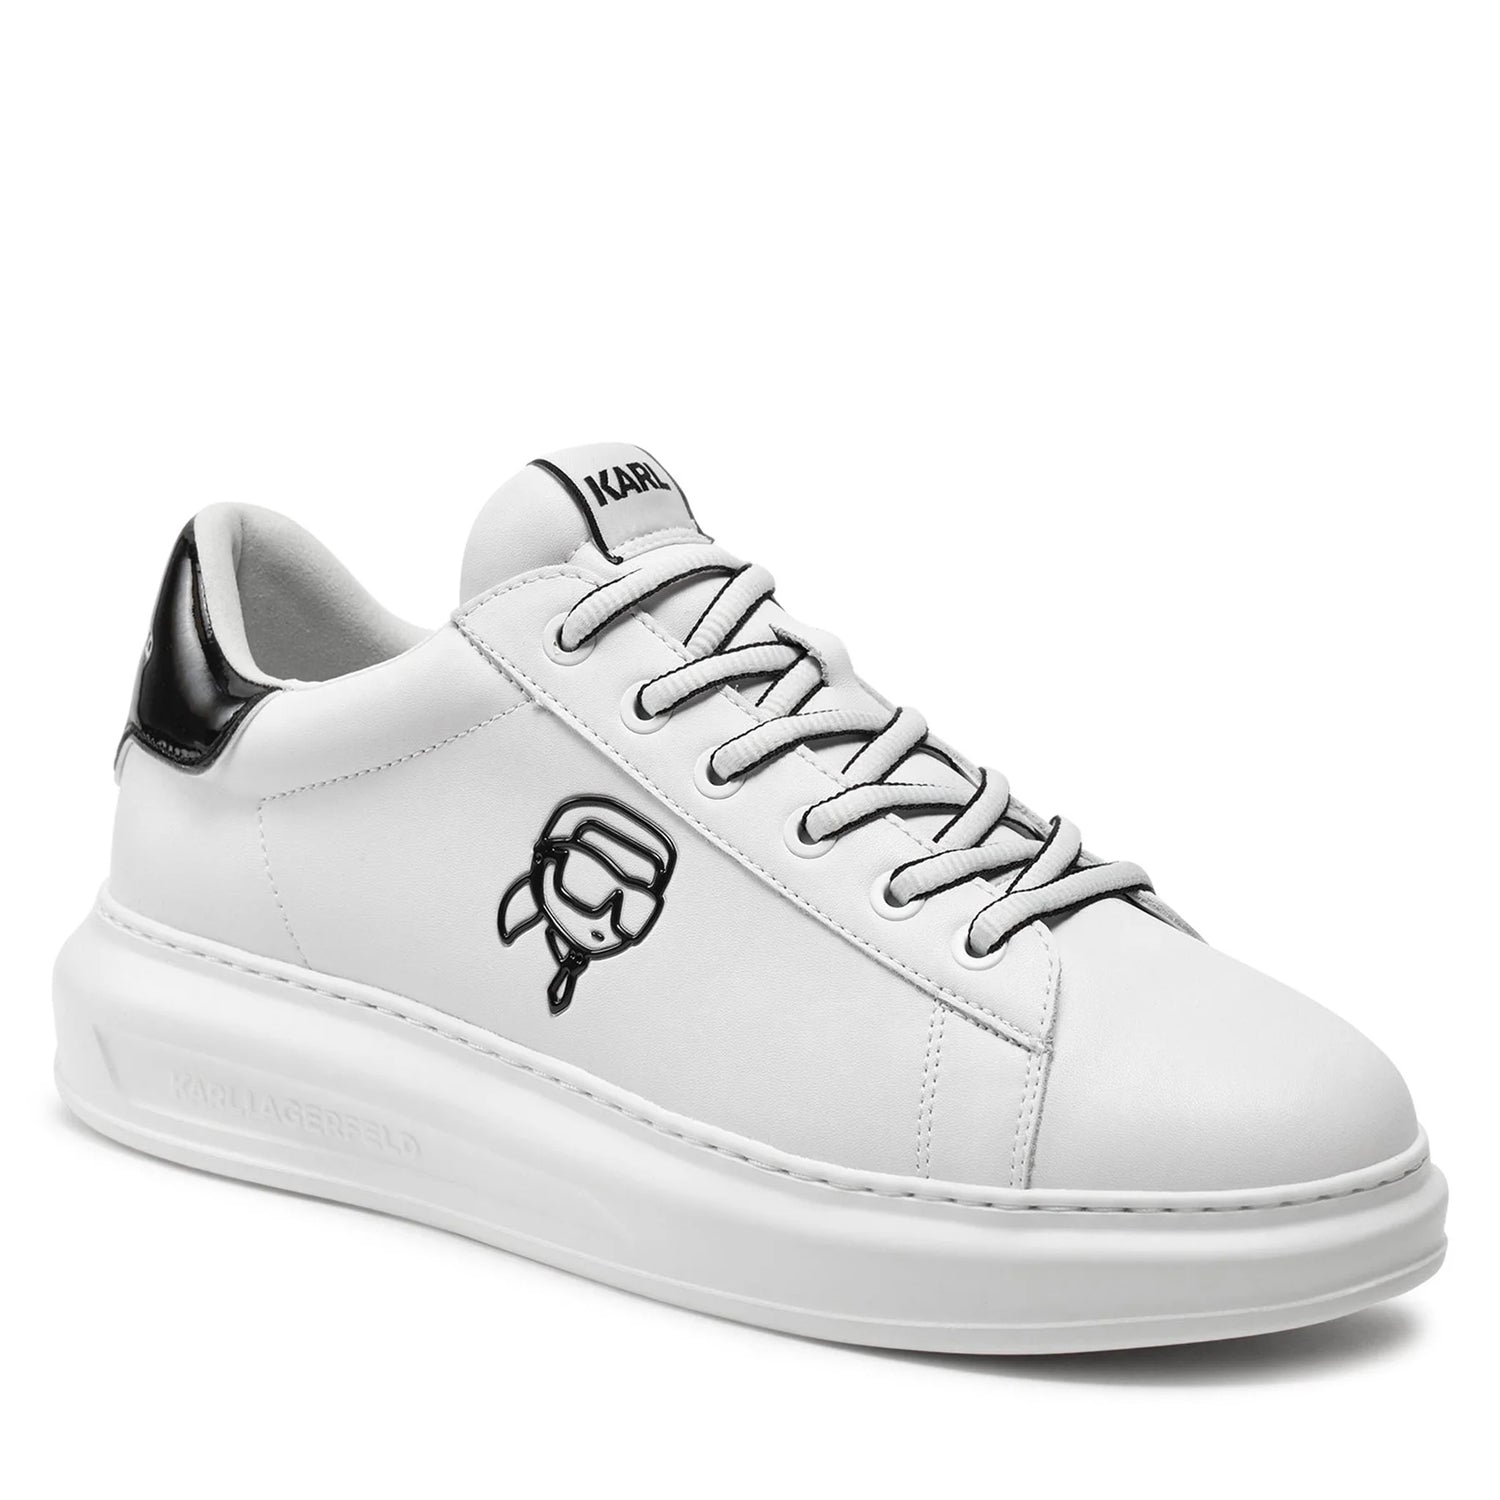 Karl Lagerfeld Sapatilhas Sneakers Shoes Kl52578 White Branco_shot1